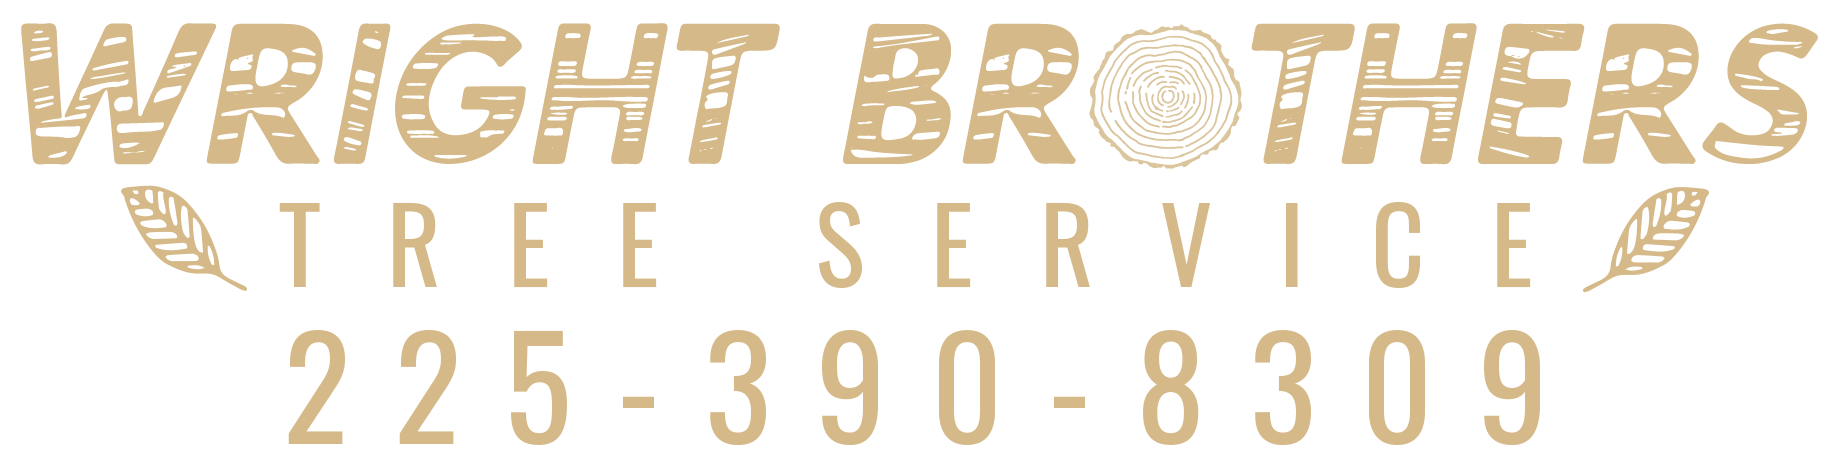 Wright Brothers Tree Service Logo